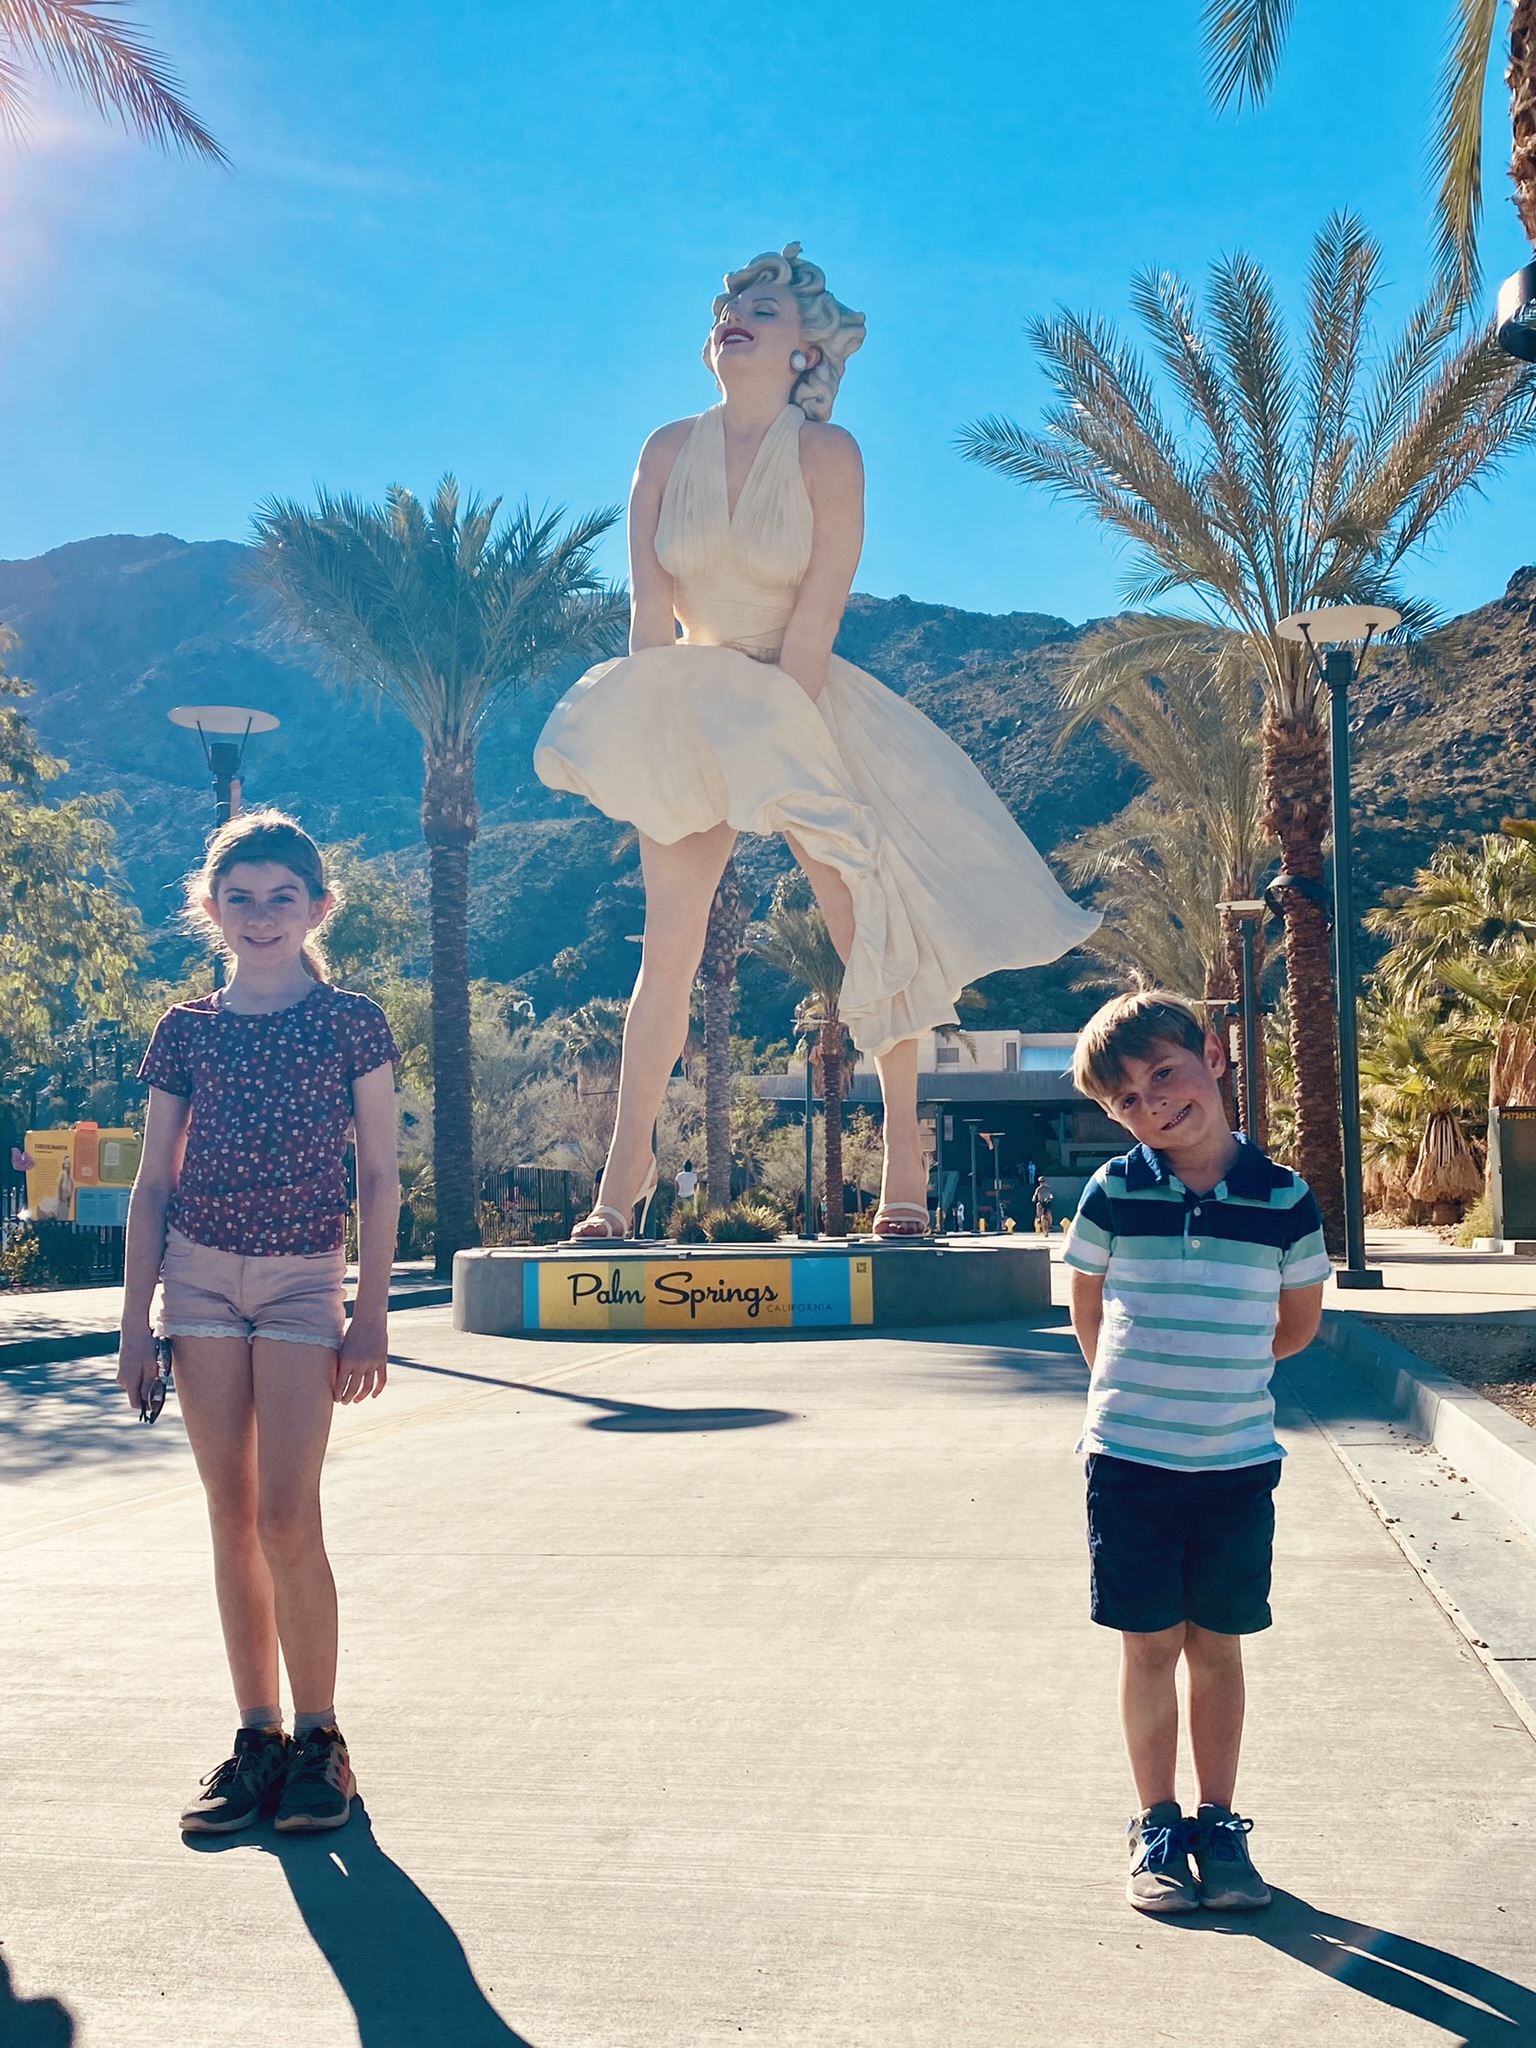 Palm Springs Marilyn Monroe statue